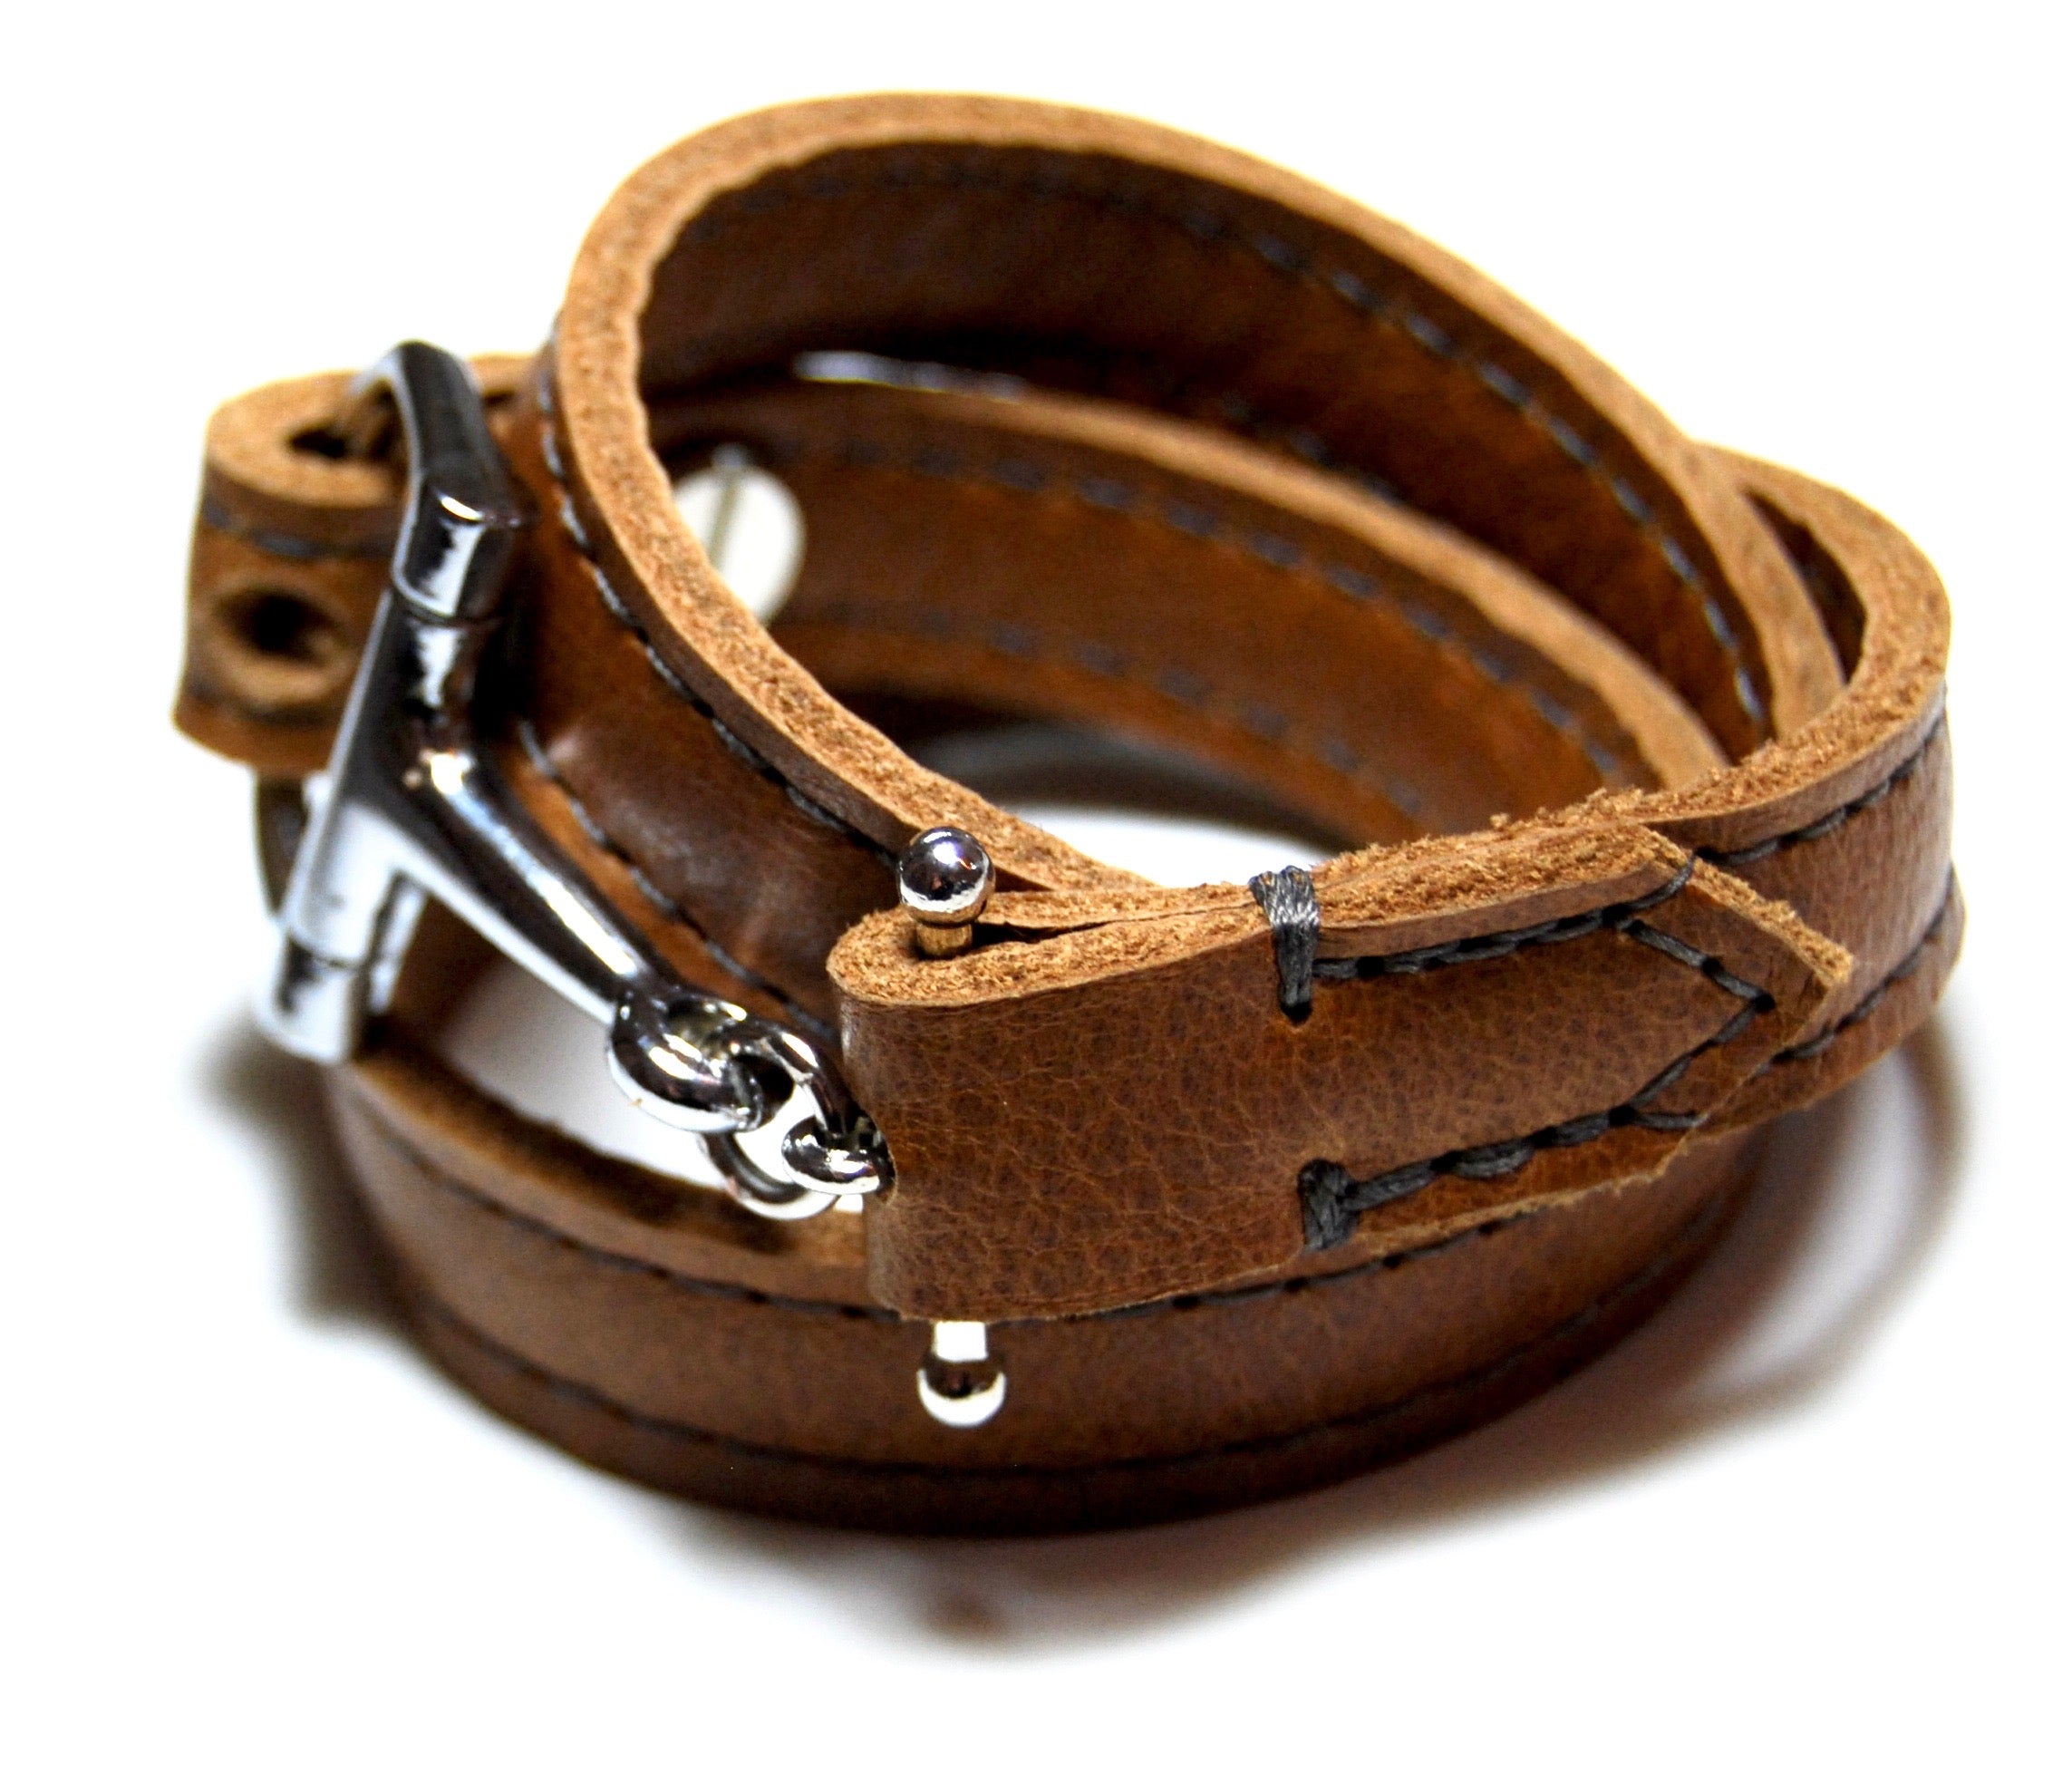 PERCHERON LEATHER WRAP in red dun | Equestrian leather bracelet | Leather wrap | Horse Bit Leather Cuff - AtelierCG™